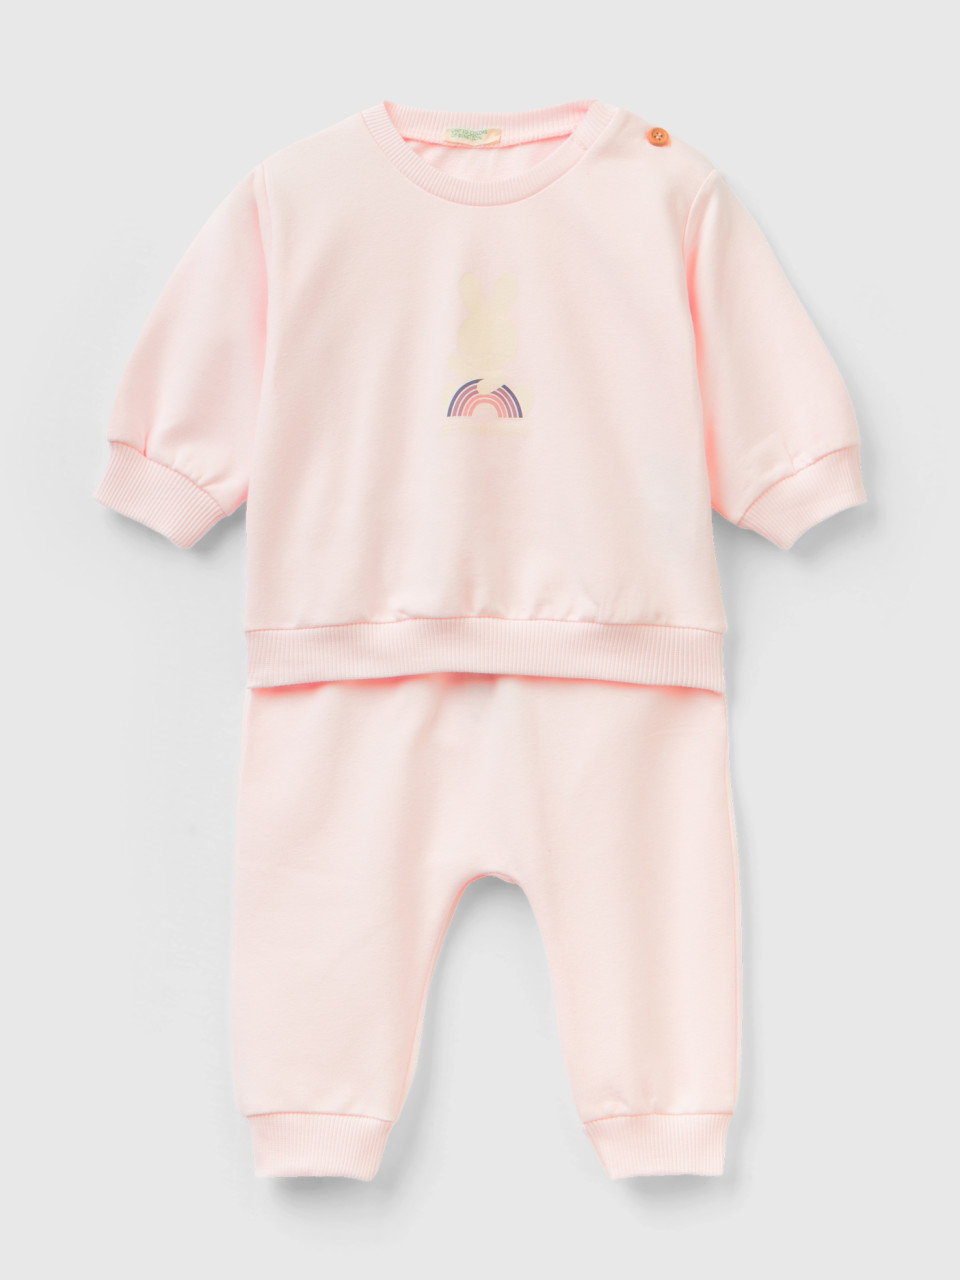 Benetton, Light Sweat Outfit, Soft Pink, Kids